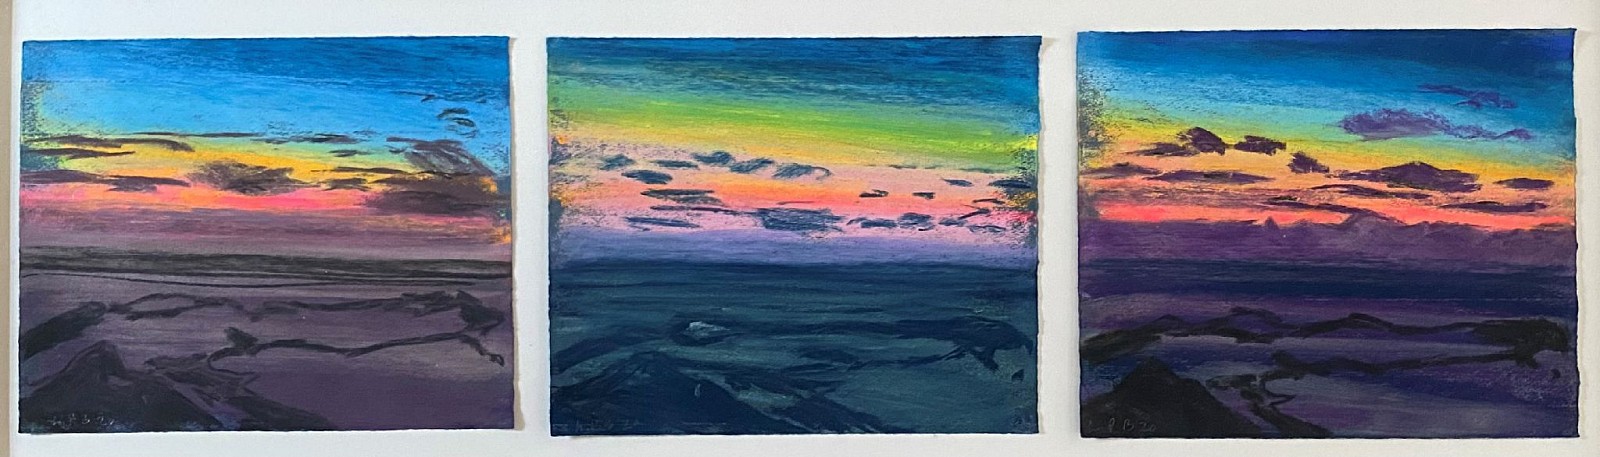 Christian Brechneff, St. Martin Sunset
pastel on paper, each 11"" x 13""
CB1221.5A
$6,800